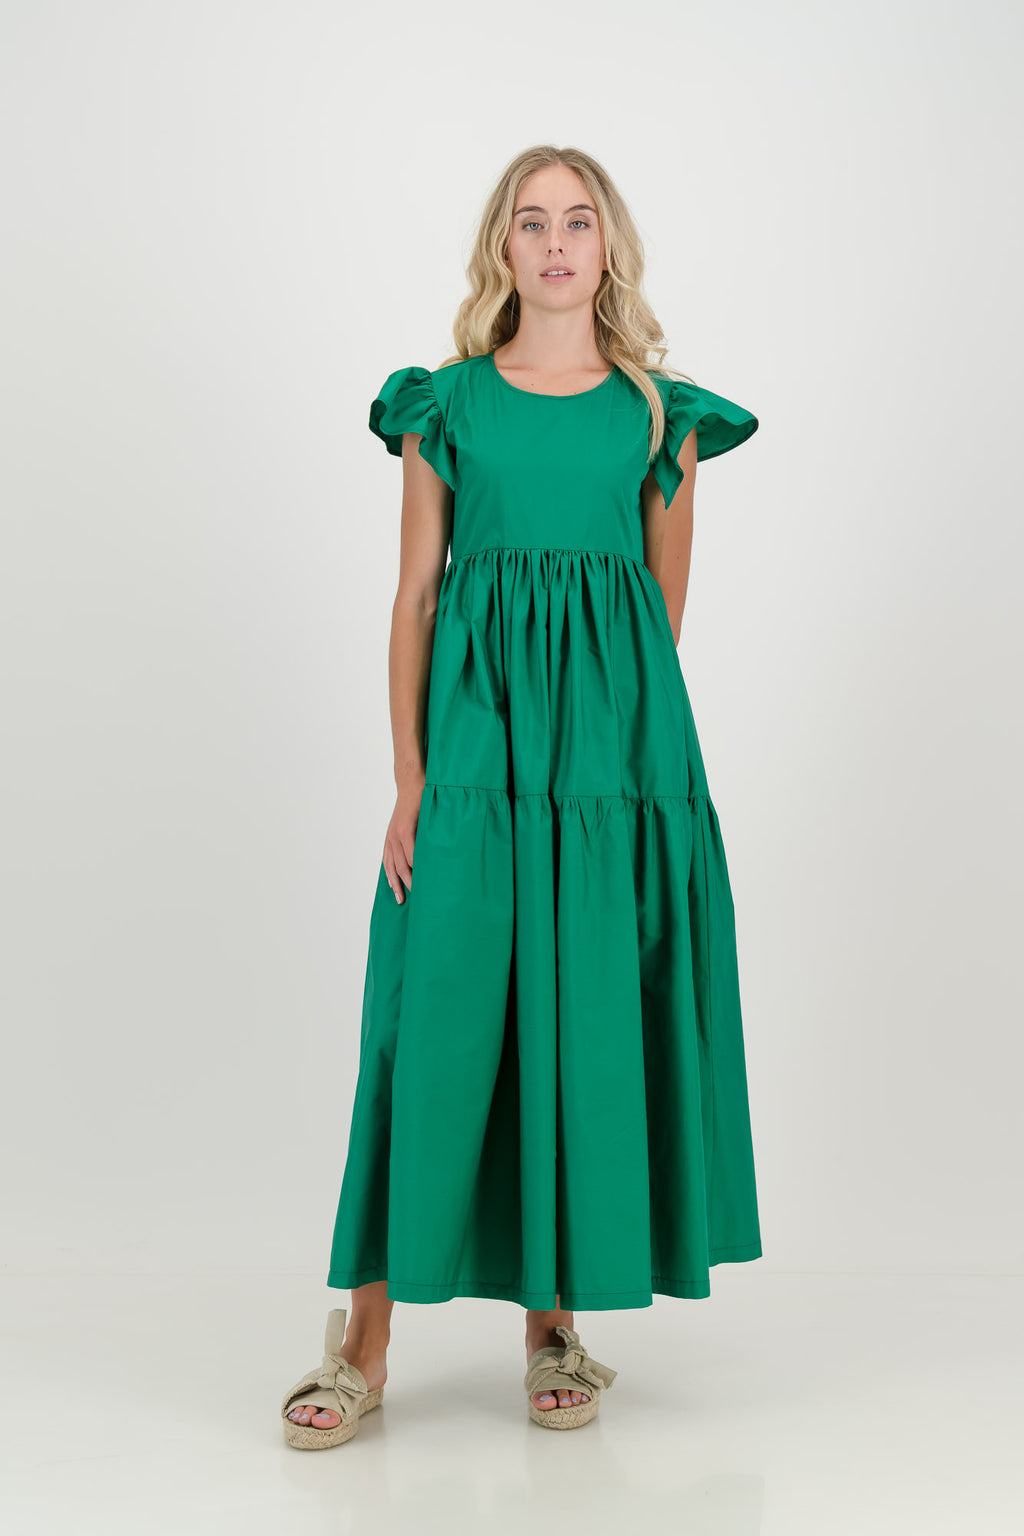 The Forest green Jade Dress